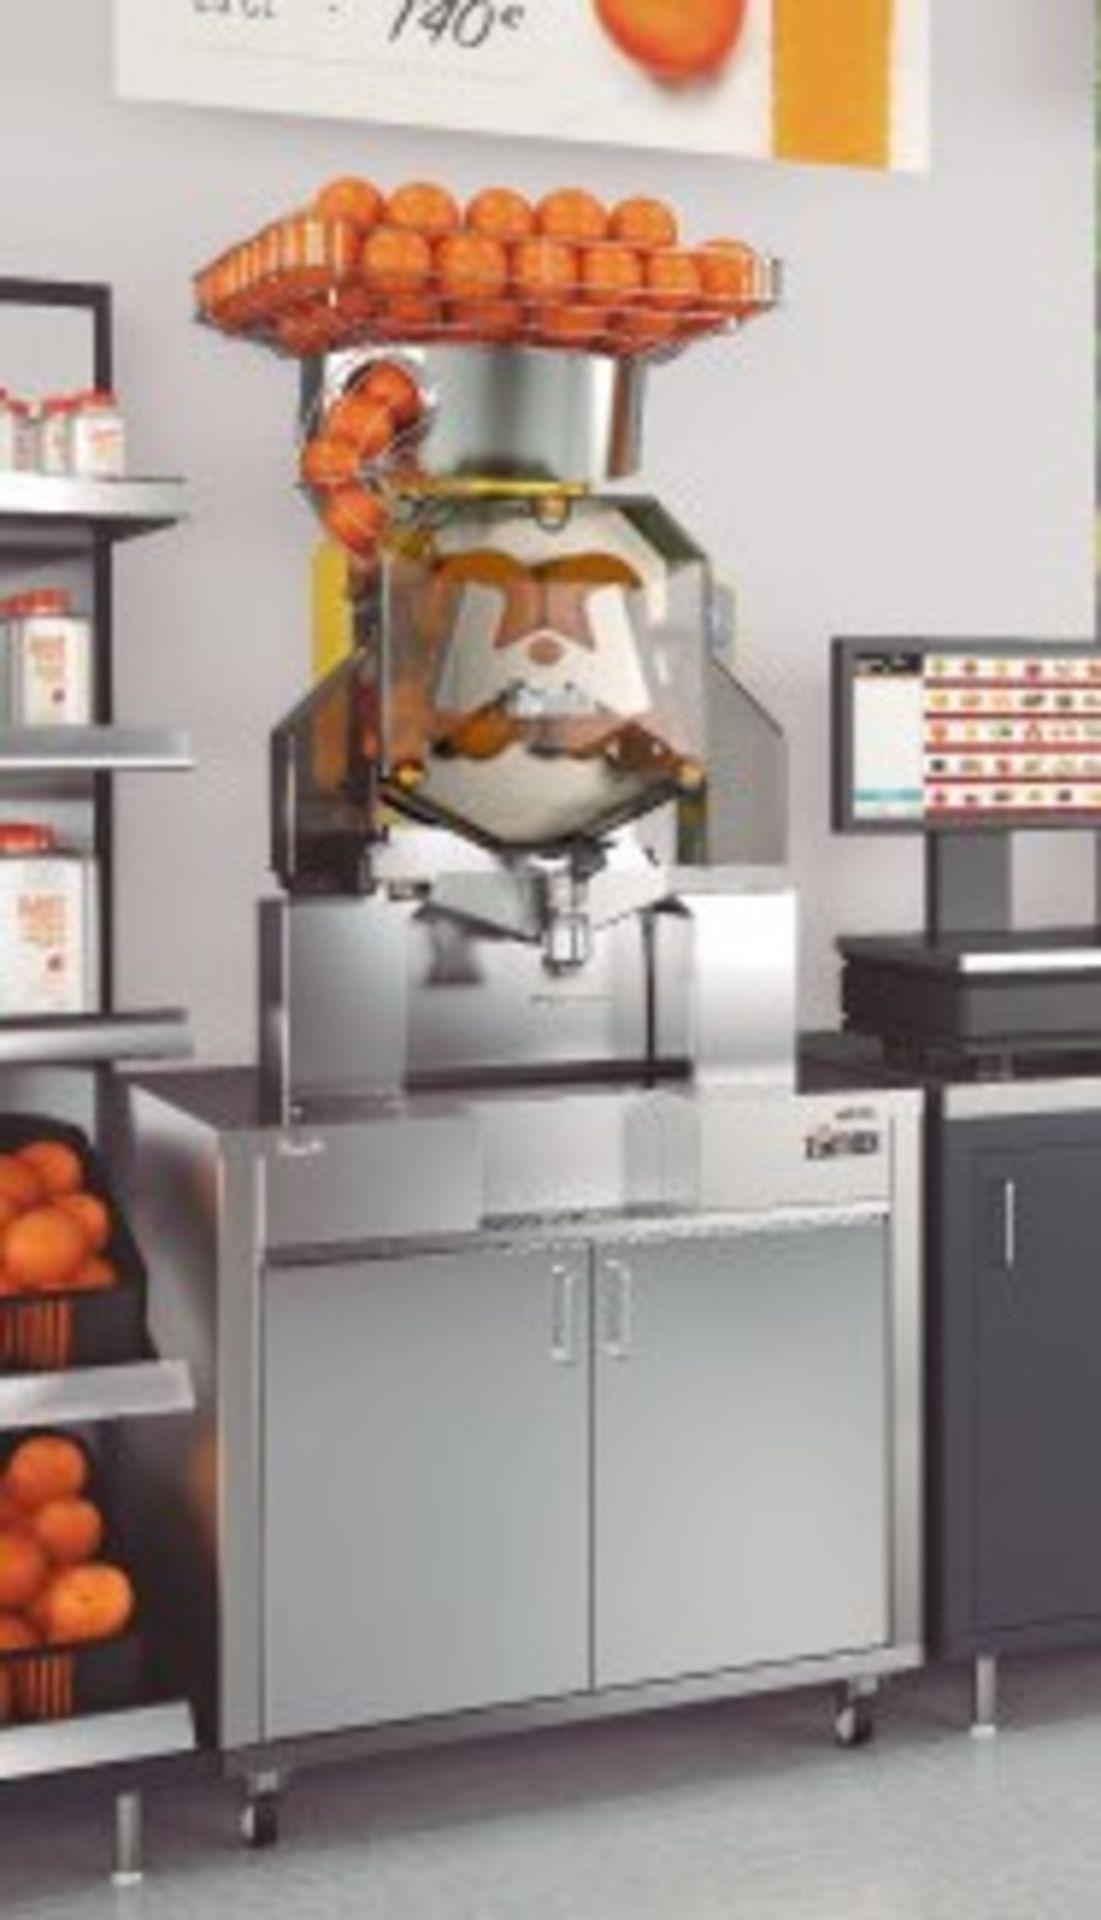 1 x Zumex Speed S +Plus Self-Service Podium Commercial Citrus Juicer - Manufactured in 2018 - - Image 18 of 21